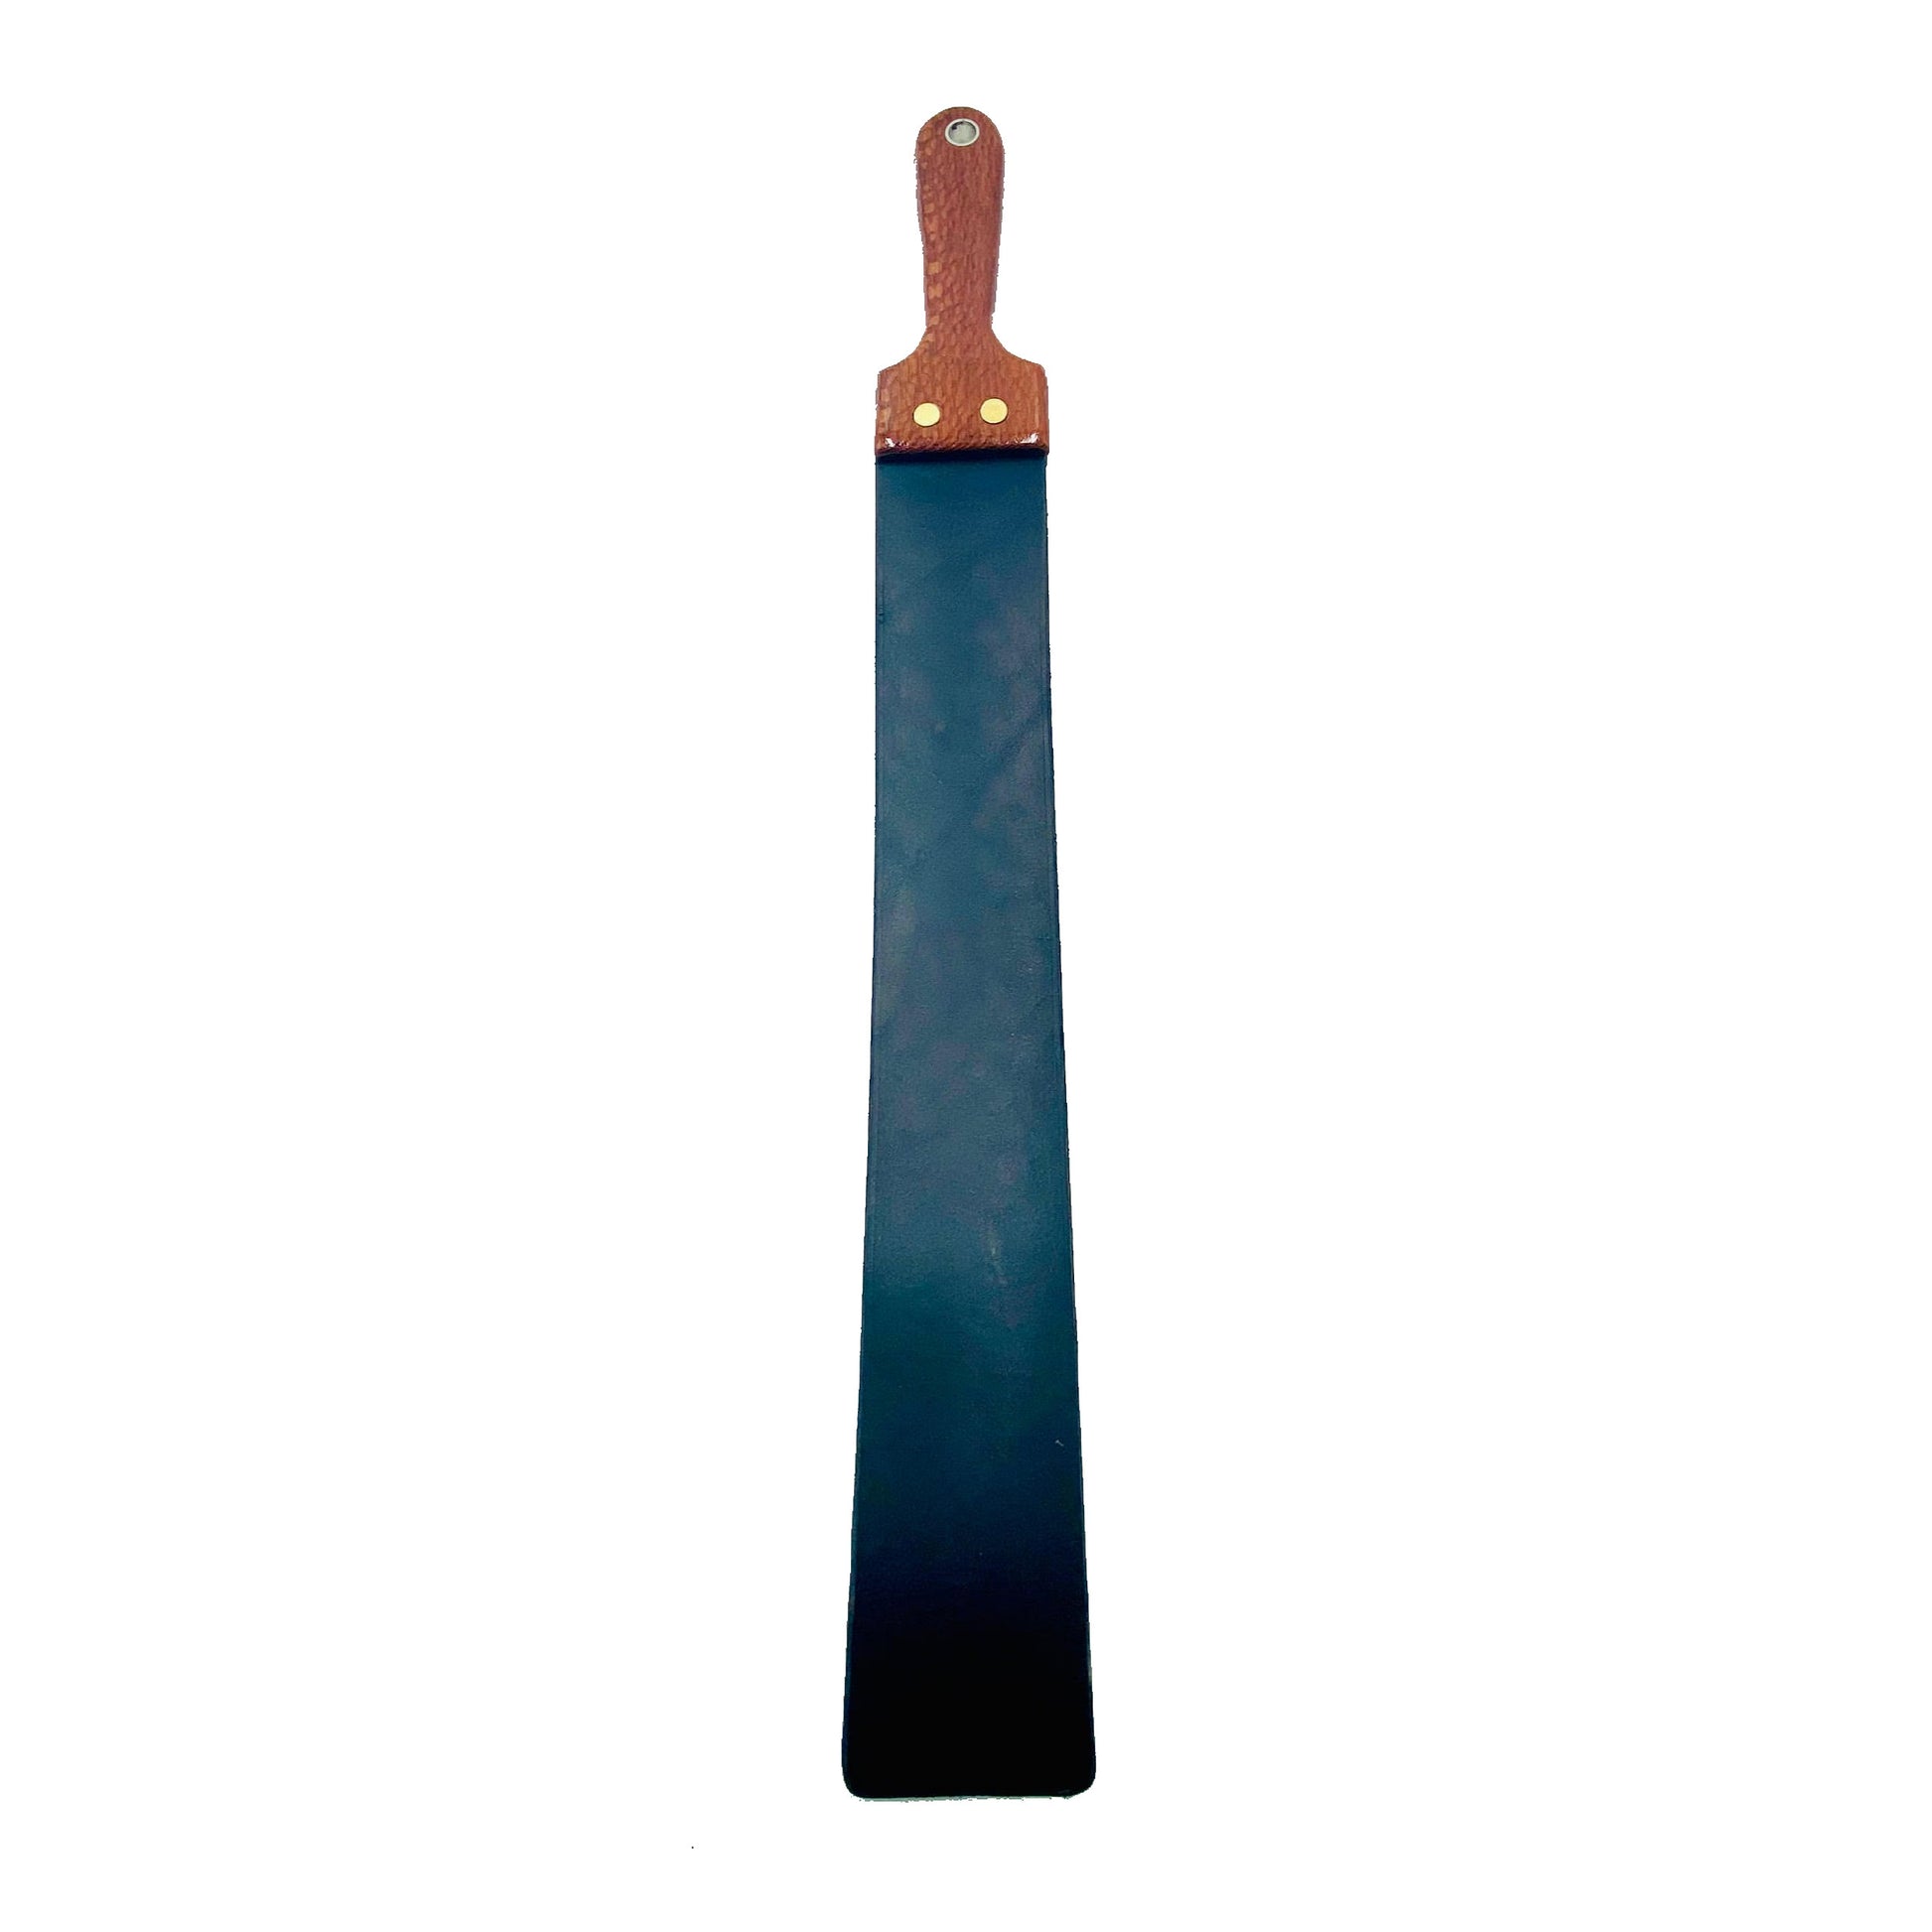 Italian Leather Barber Strap Spanking Paddle, Long Wooden Spanking Paddle, hardwood paddle, wood paddle, paddle, spanking paddle, paddle, bdsm, impact, punishment, discipline